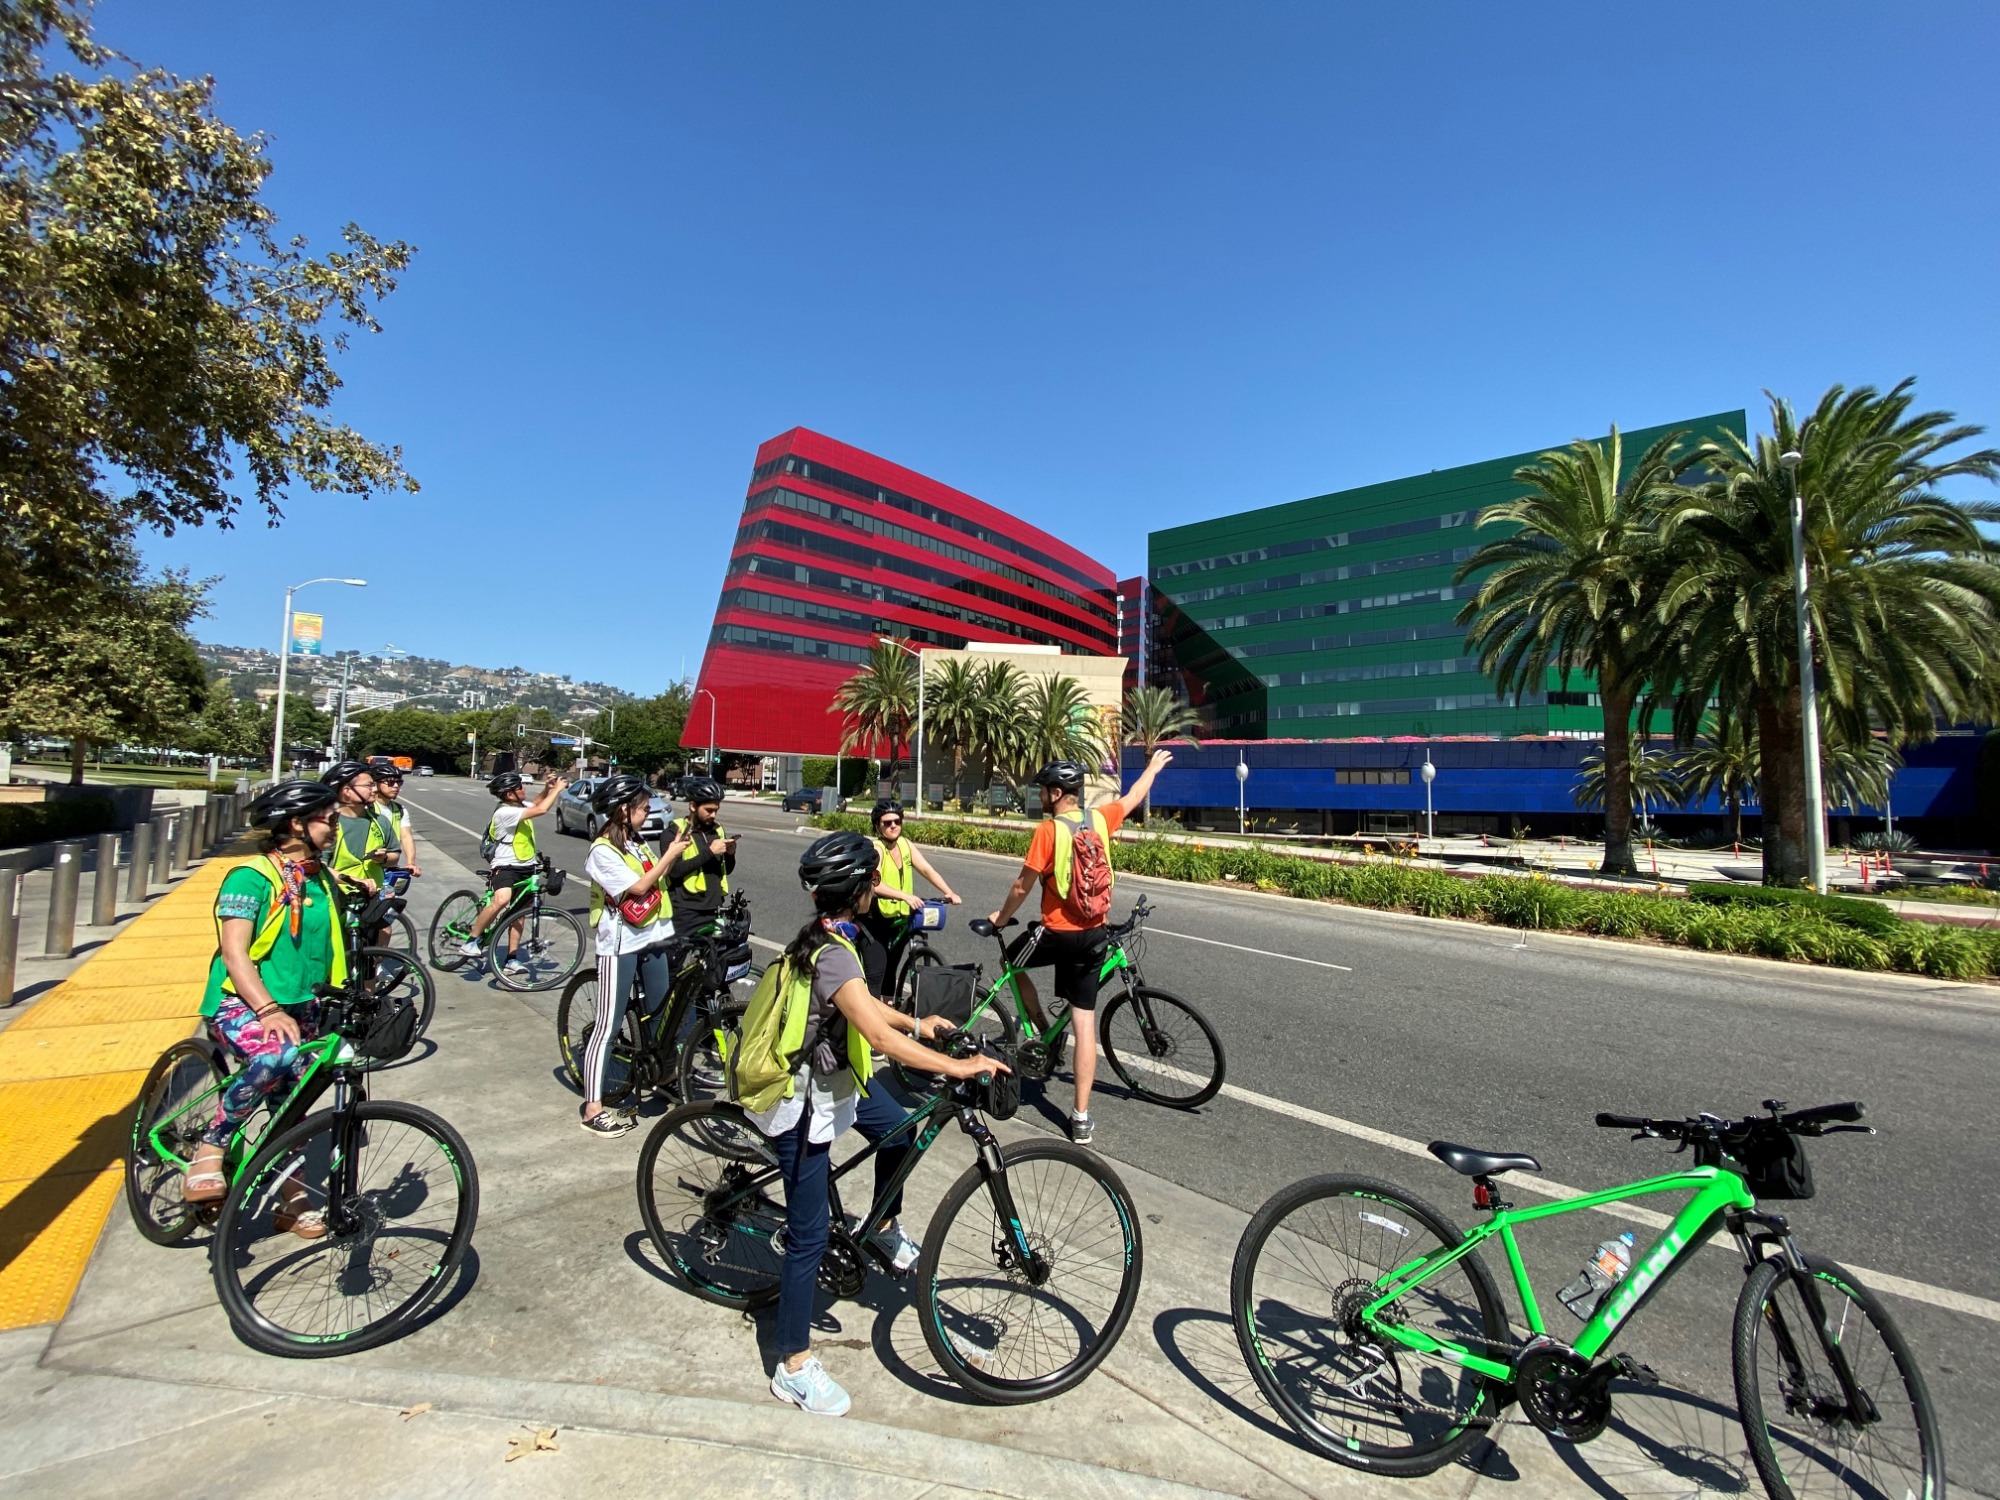 Bikes and Hikes LA at the Pacific Design Center